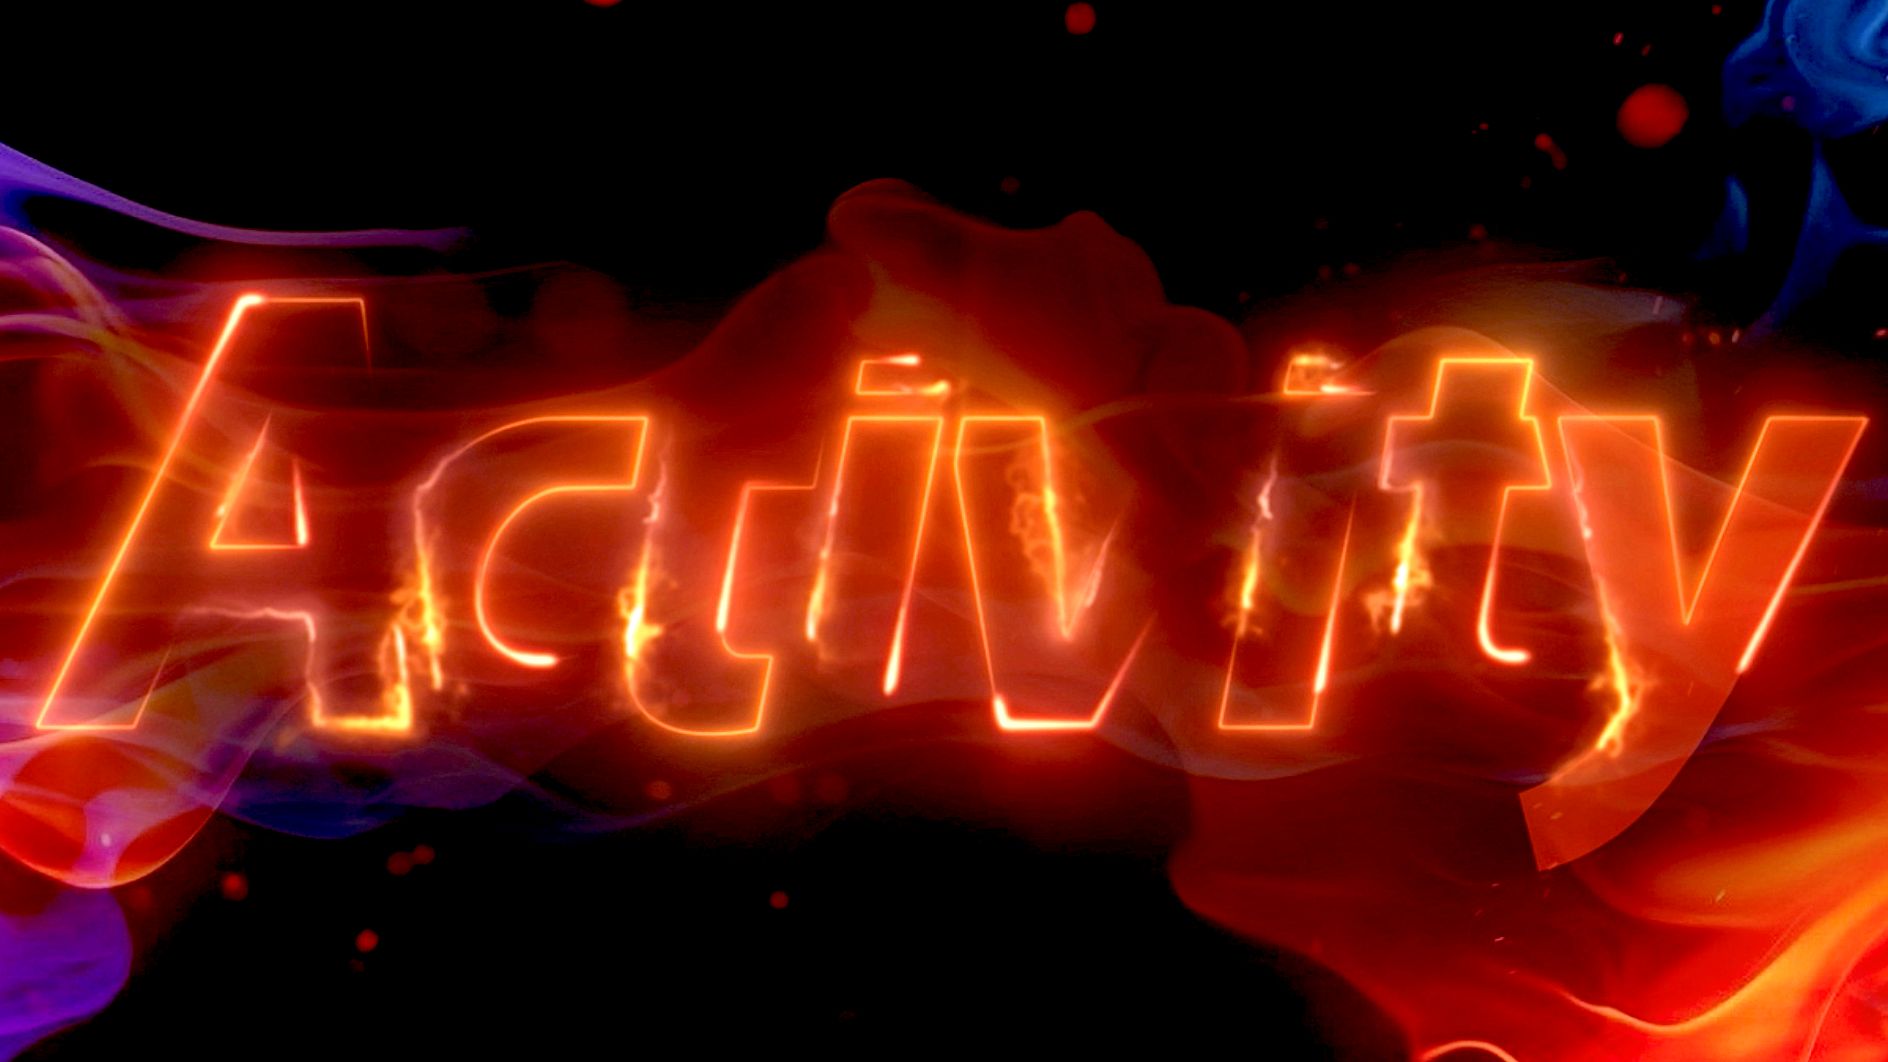 Activity - 1. évad online film